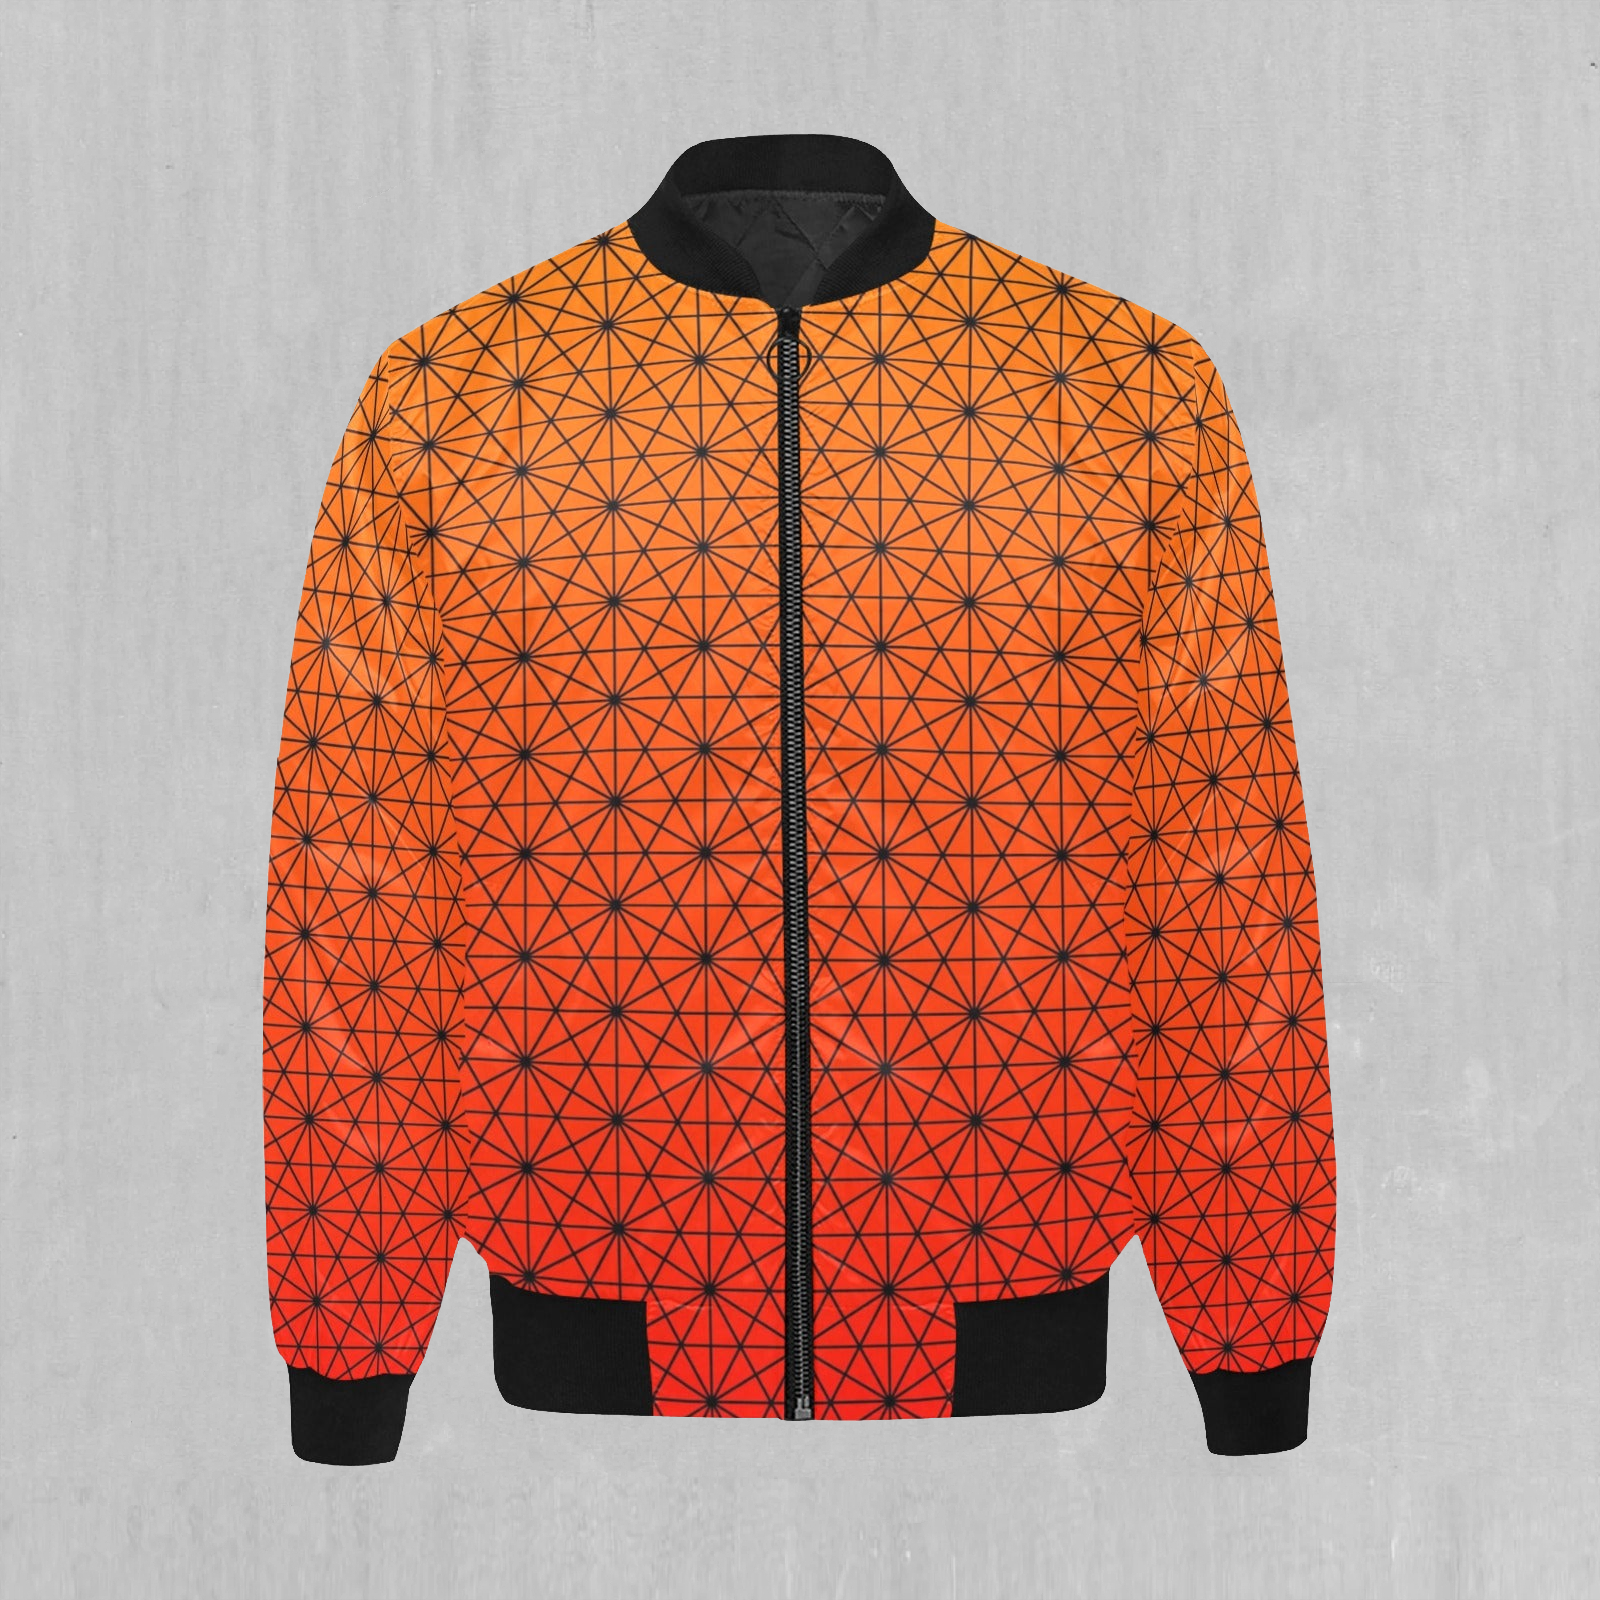 Star Net (Pyro) Men's Bomber Jacket - Azimuth Clothing